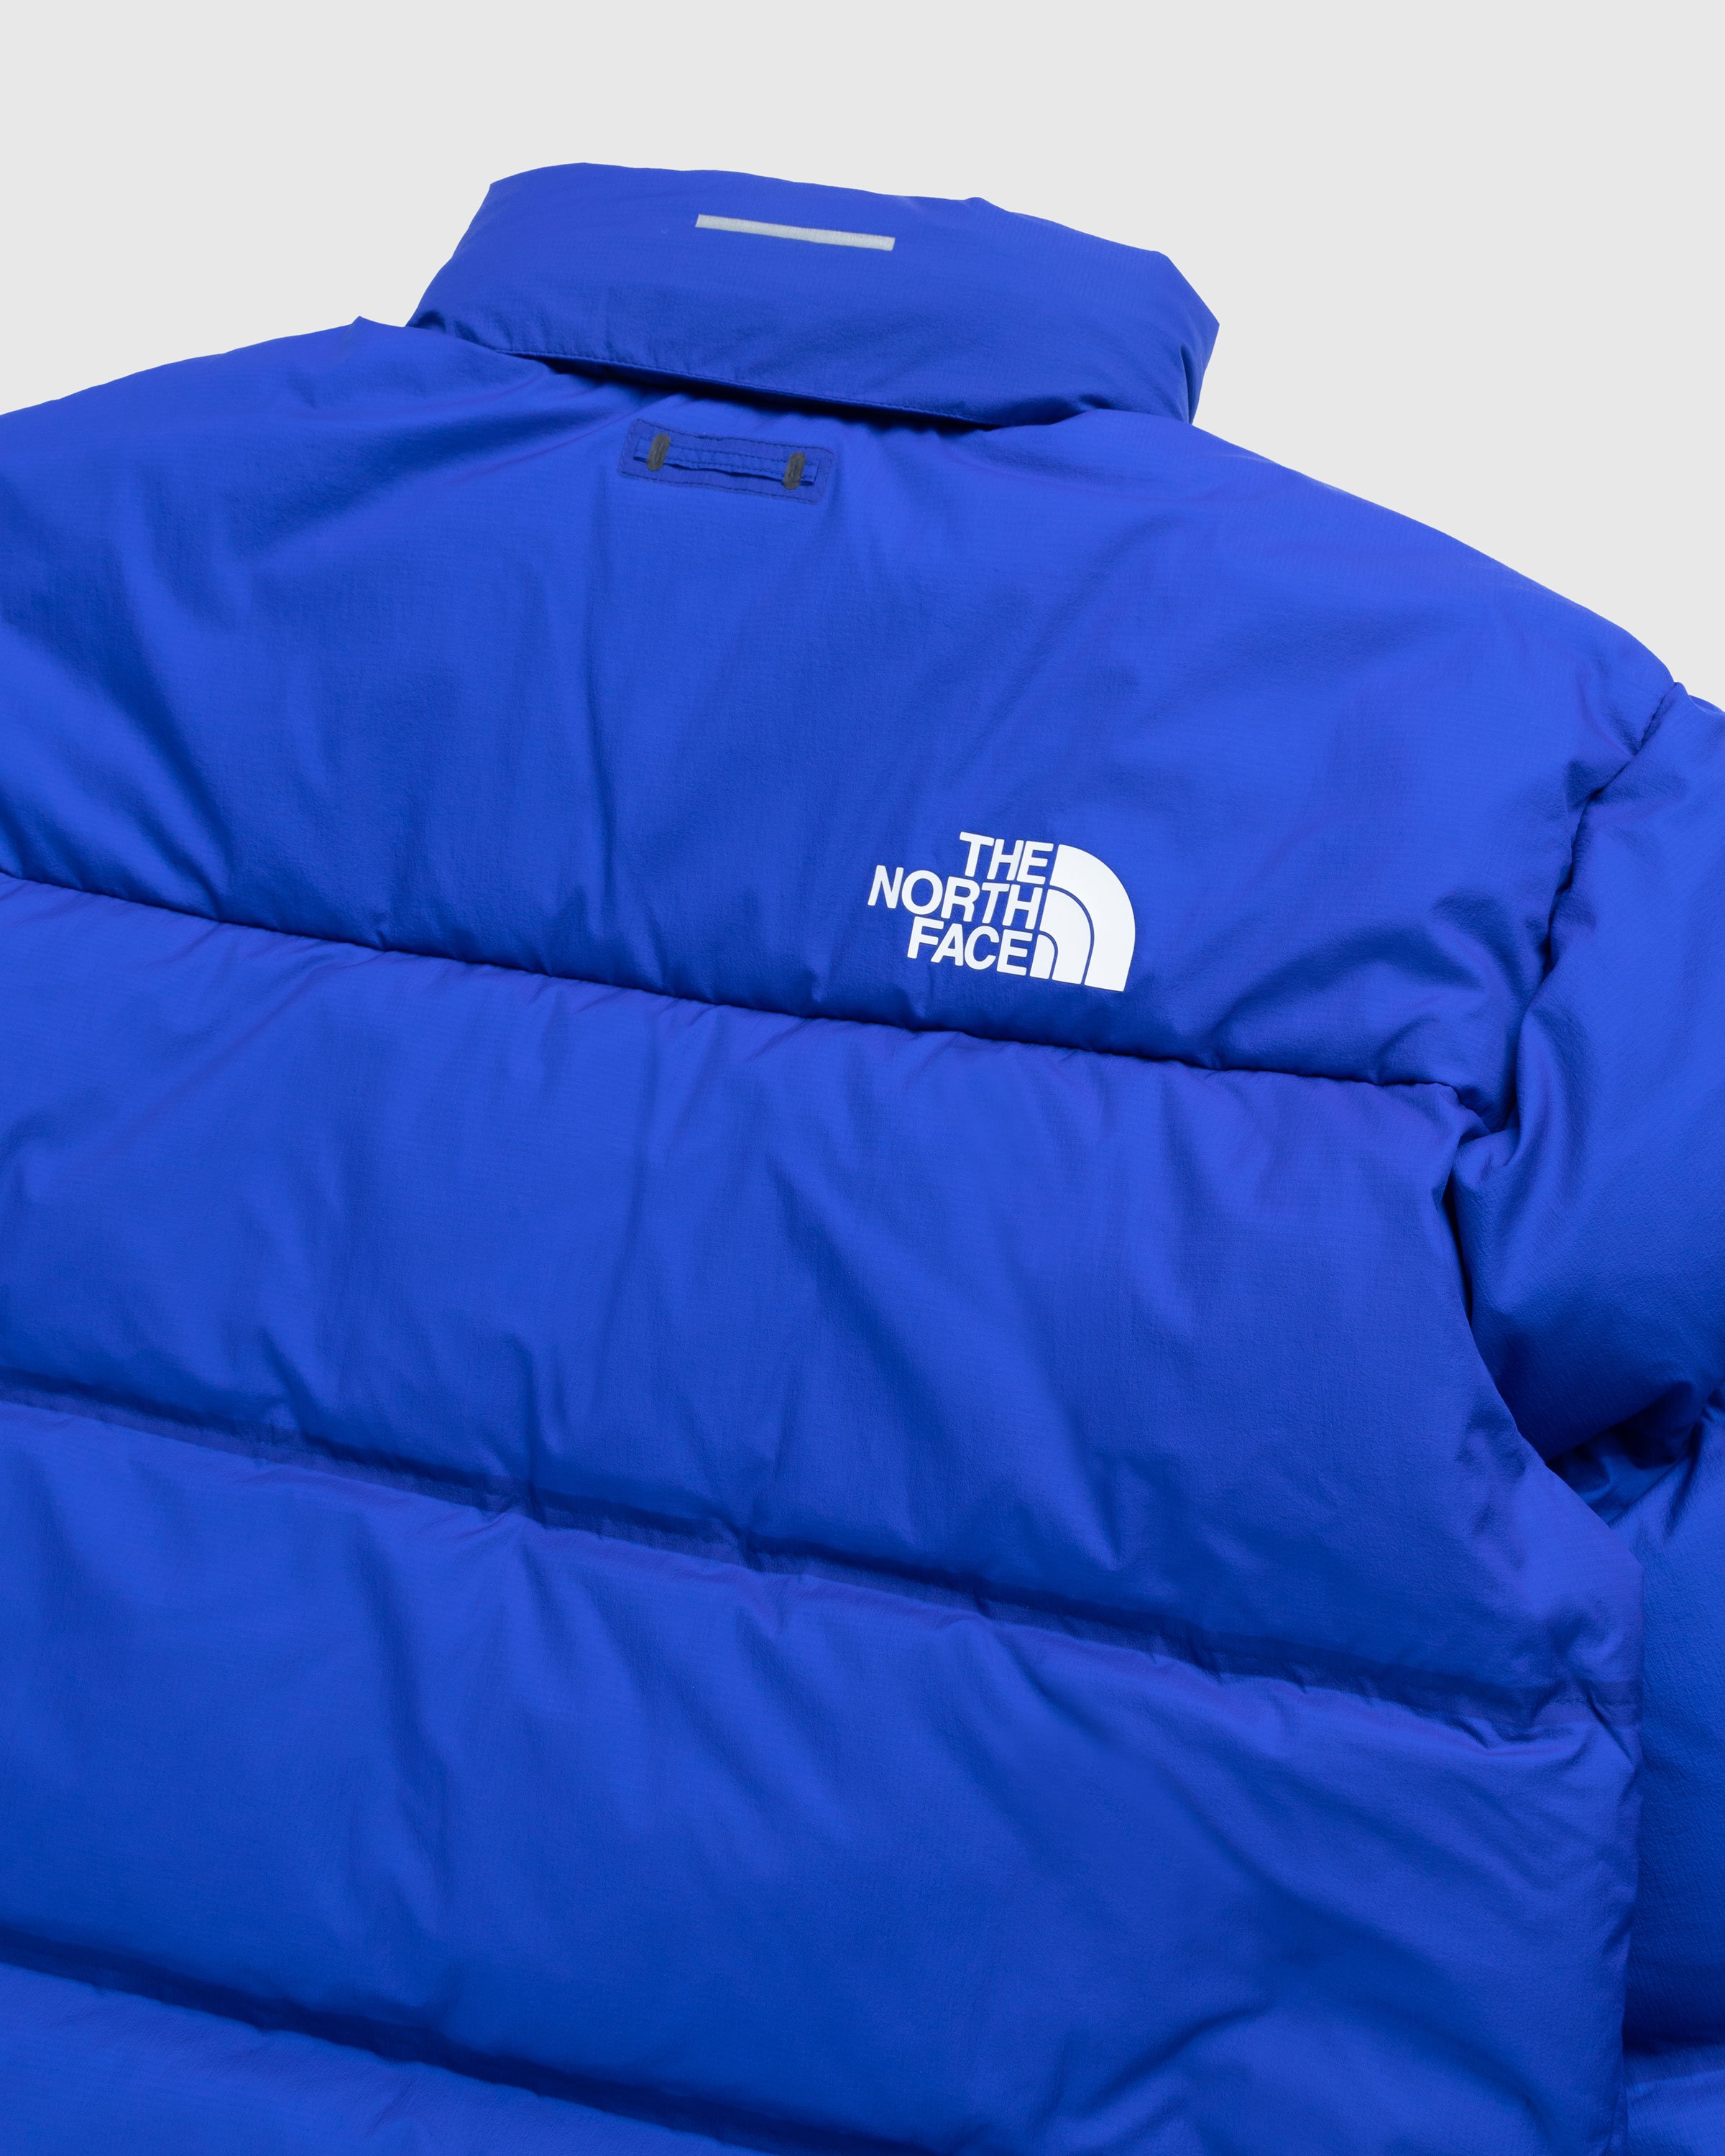 The North Face - Rmst Nuptse Jacket Lapis Blue - Clothing - Blue - Image 3